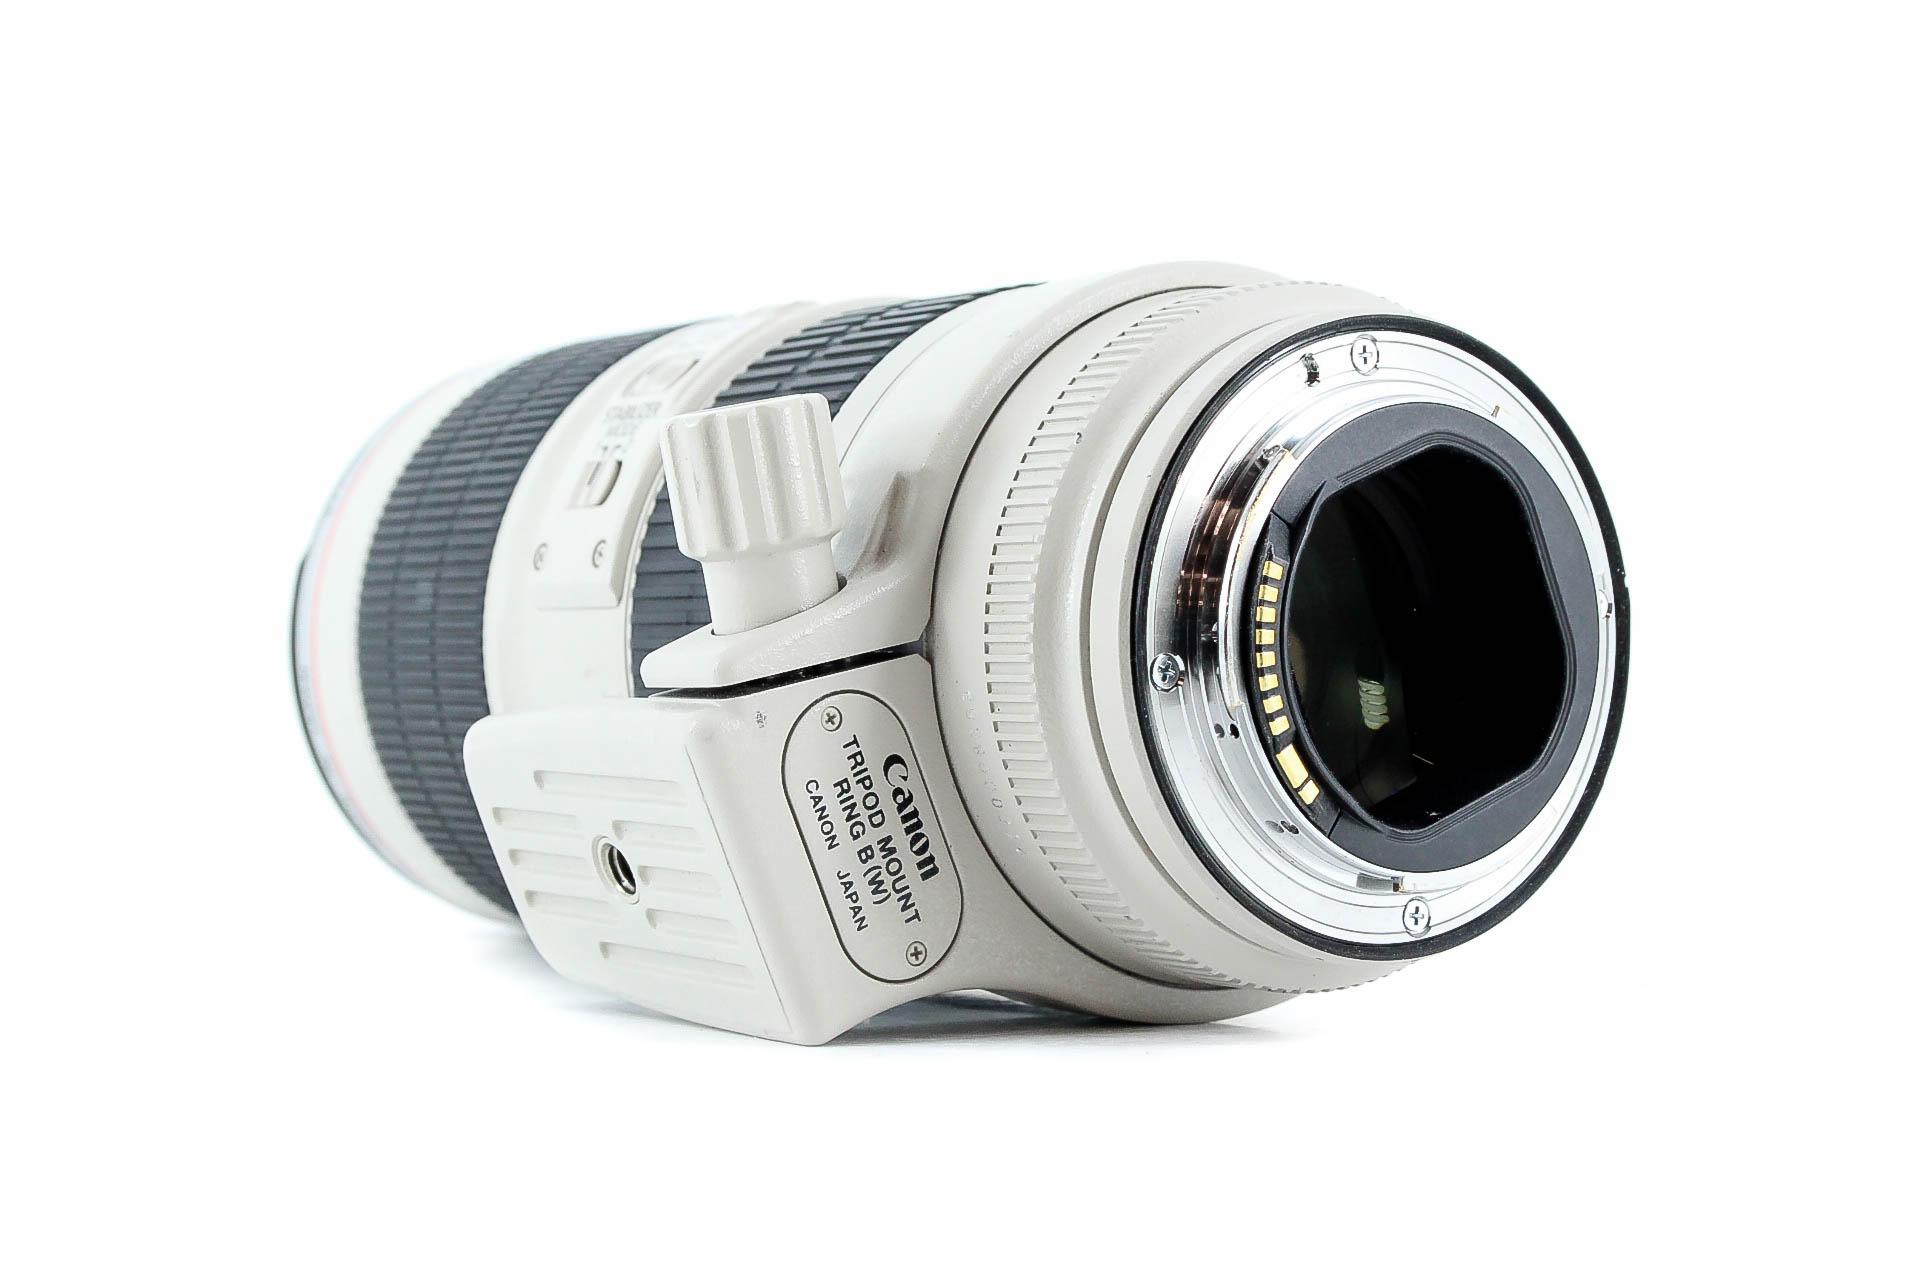 Canon EF 70-200mm f/2.8 L IS II USM Lens